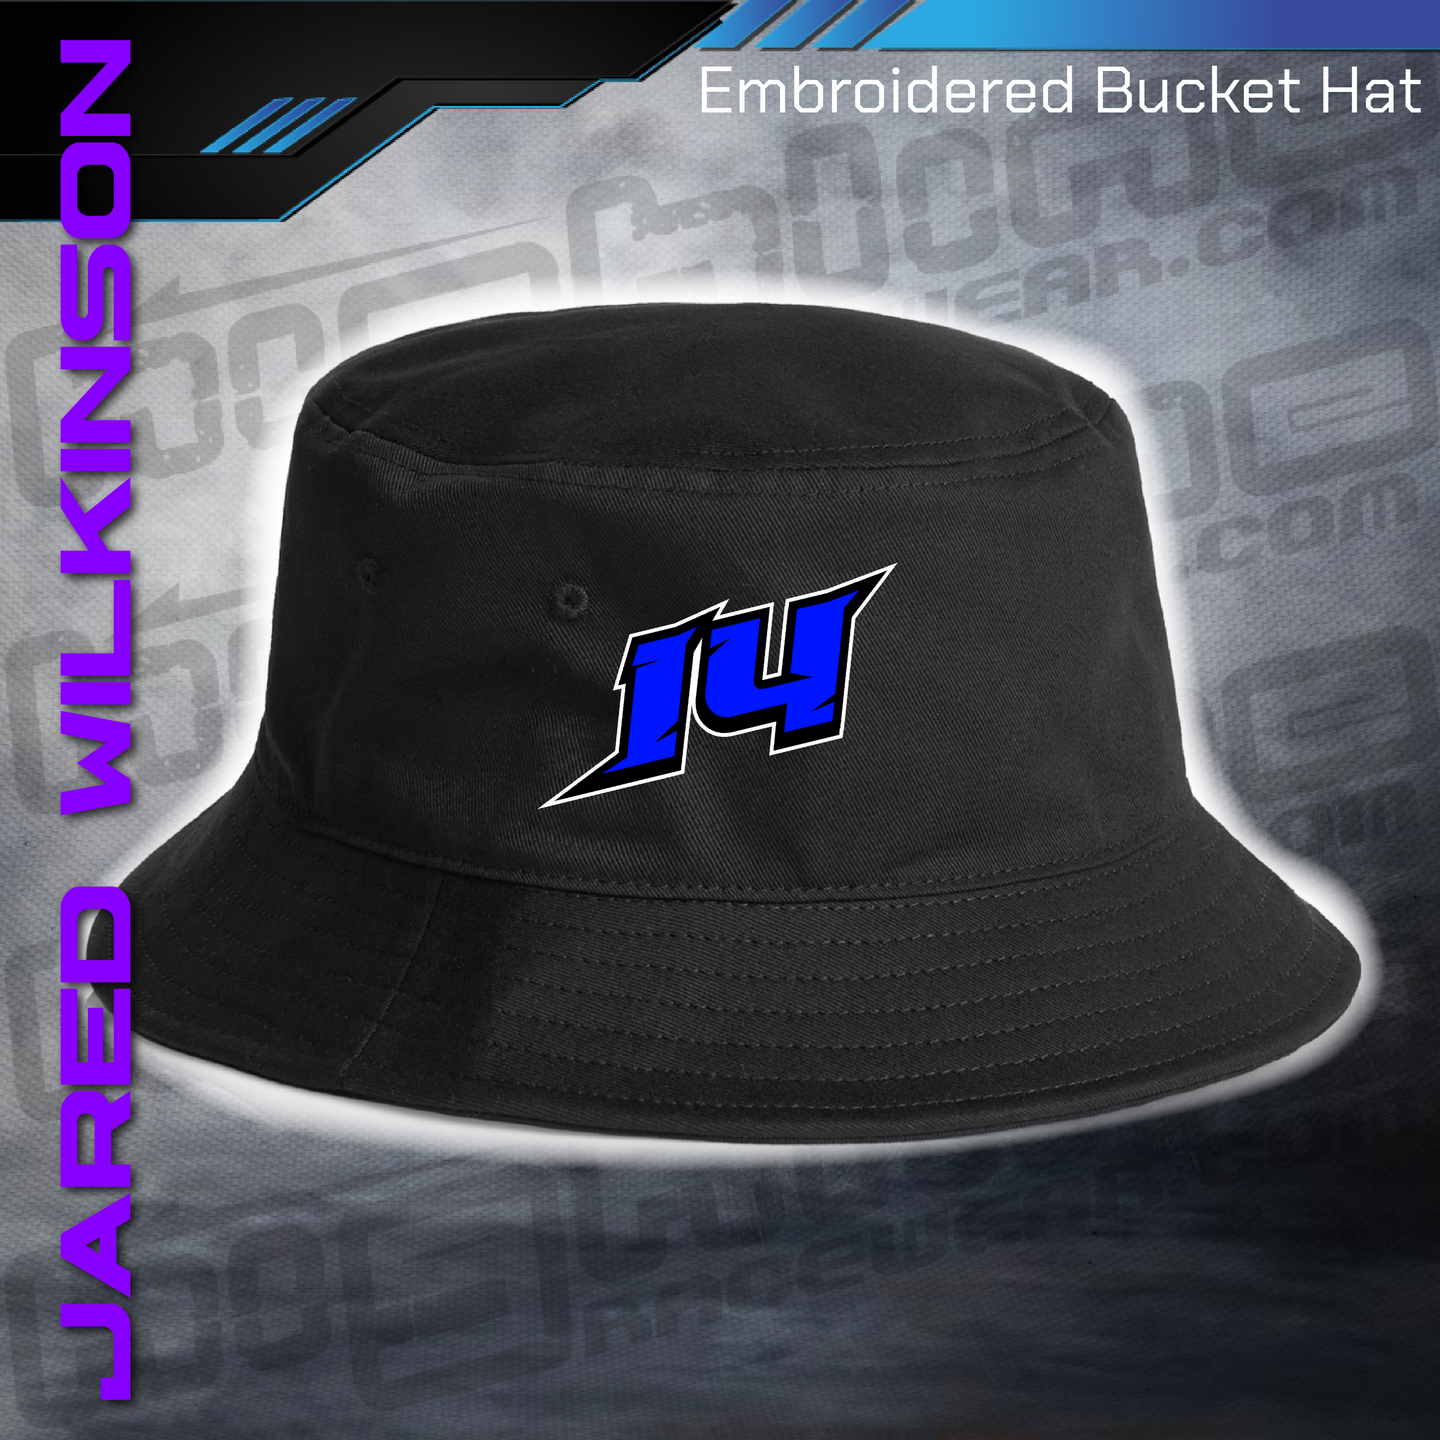 Embroidered Bucket Hat - Jared Wilkinson